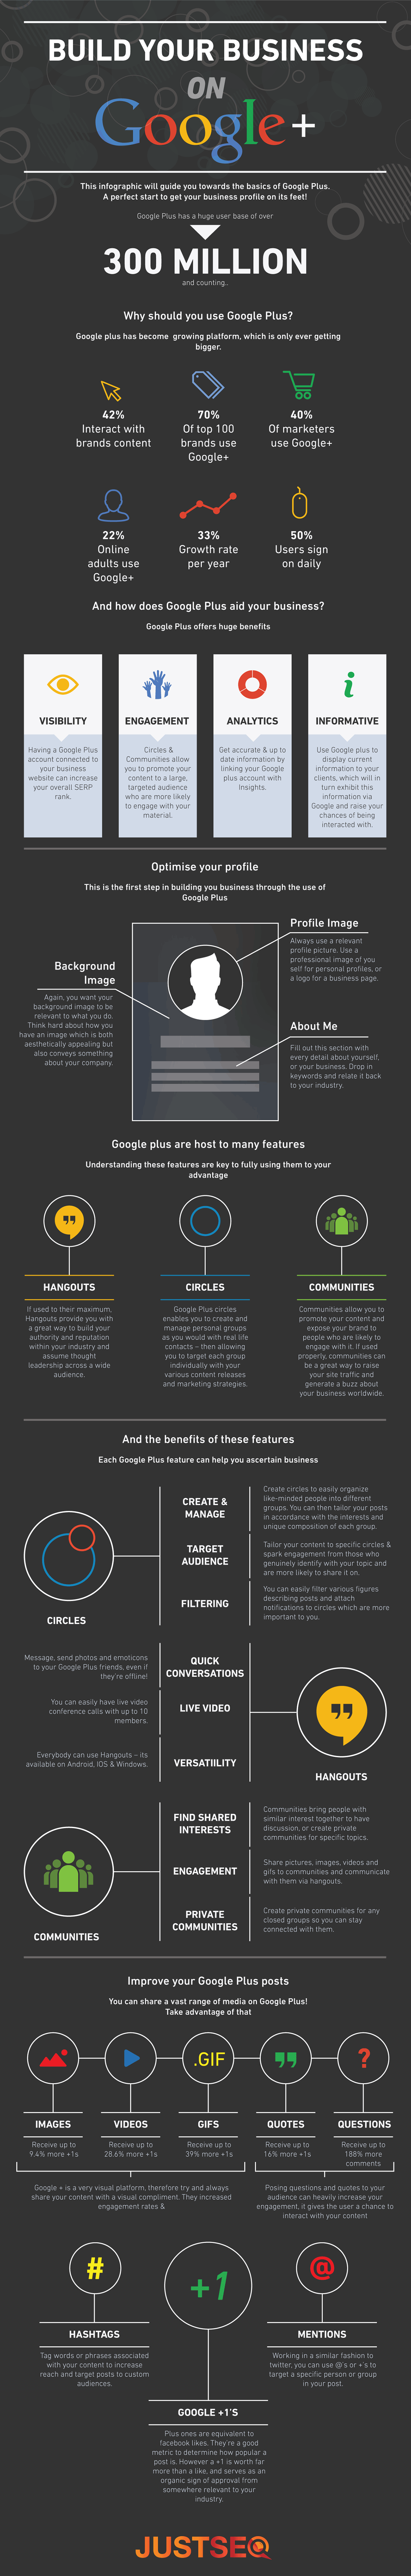 googleplus social media marketing infographic